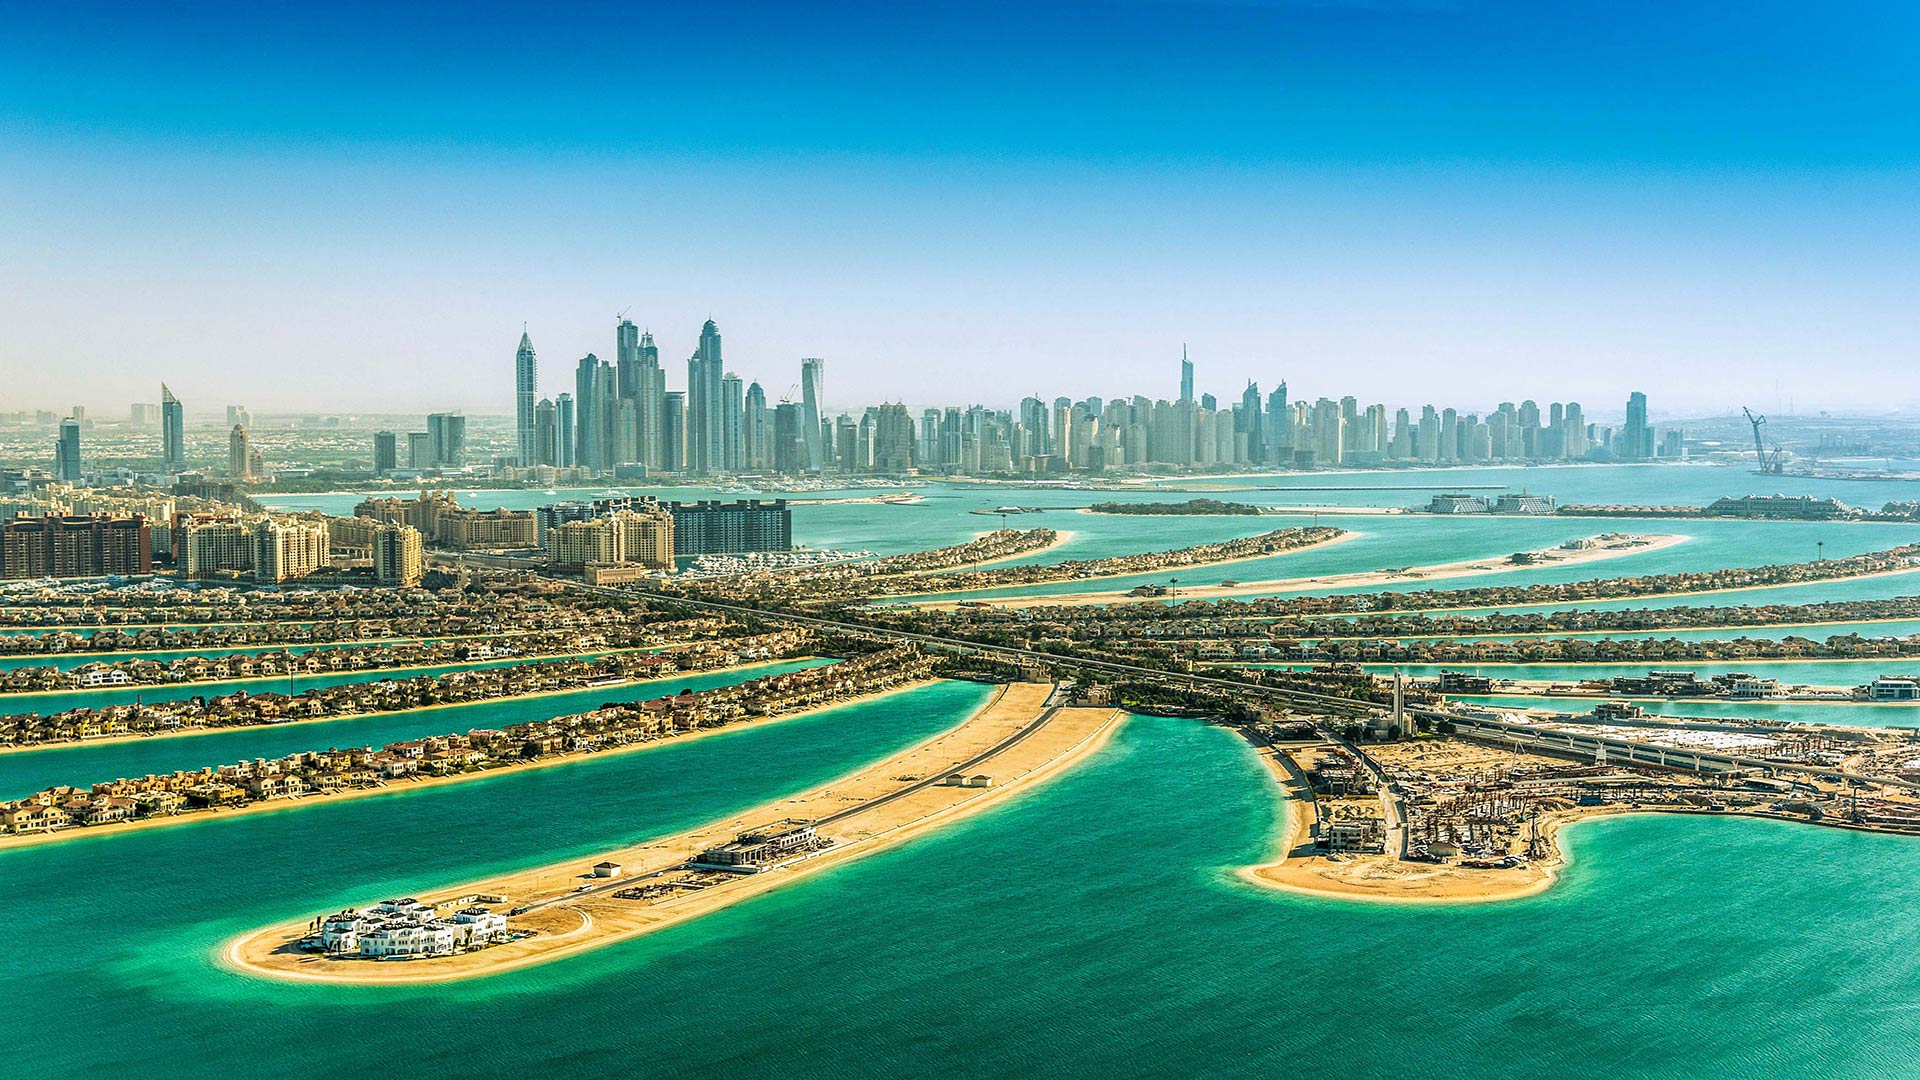 PALM BEACH TOWERS 3 by Nakheel Properties in Palm Jumeirah, Dubai, UAE - 9